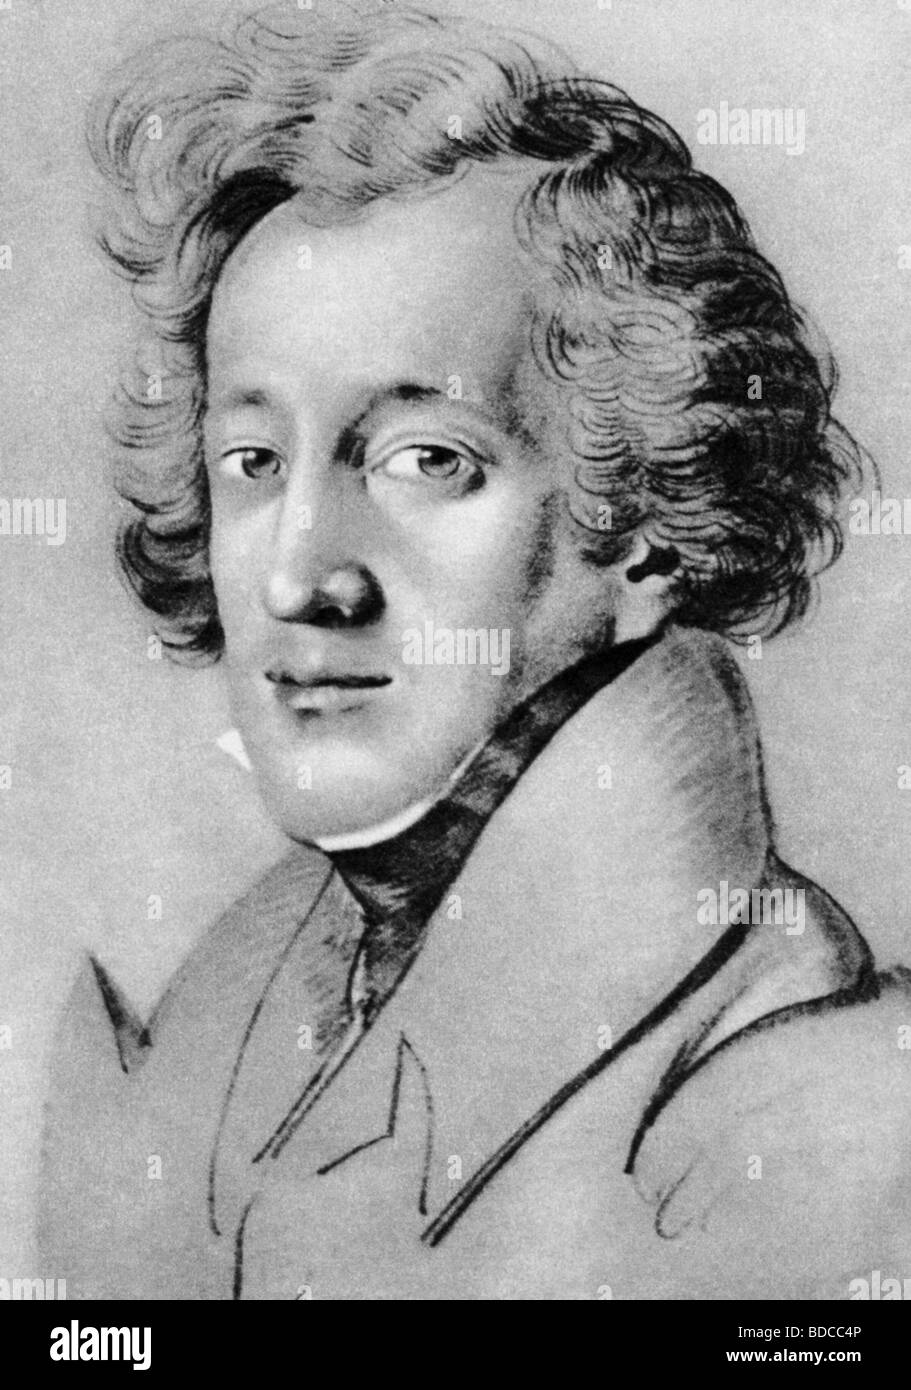 Mendelssohn-Bartholdy, Felix, 3.2.1809 - 4.11.1847, German composer, portrait, drawing, circa 1840, Stock Photo